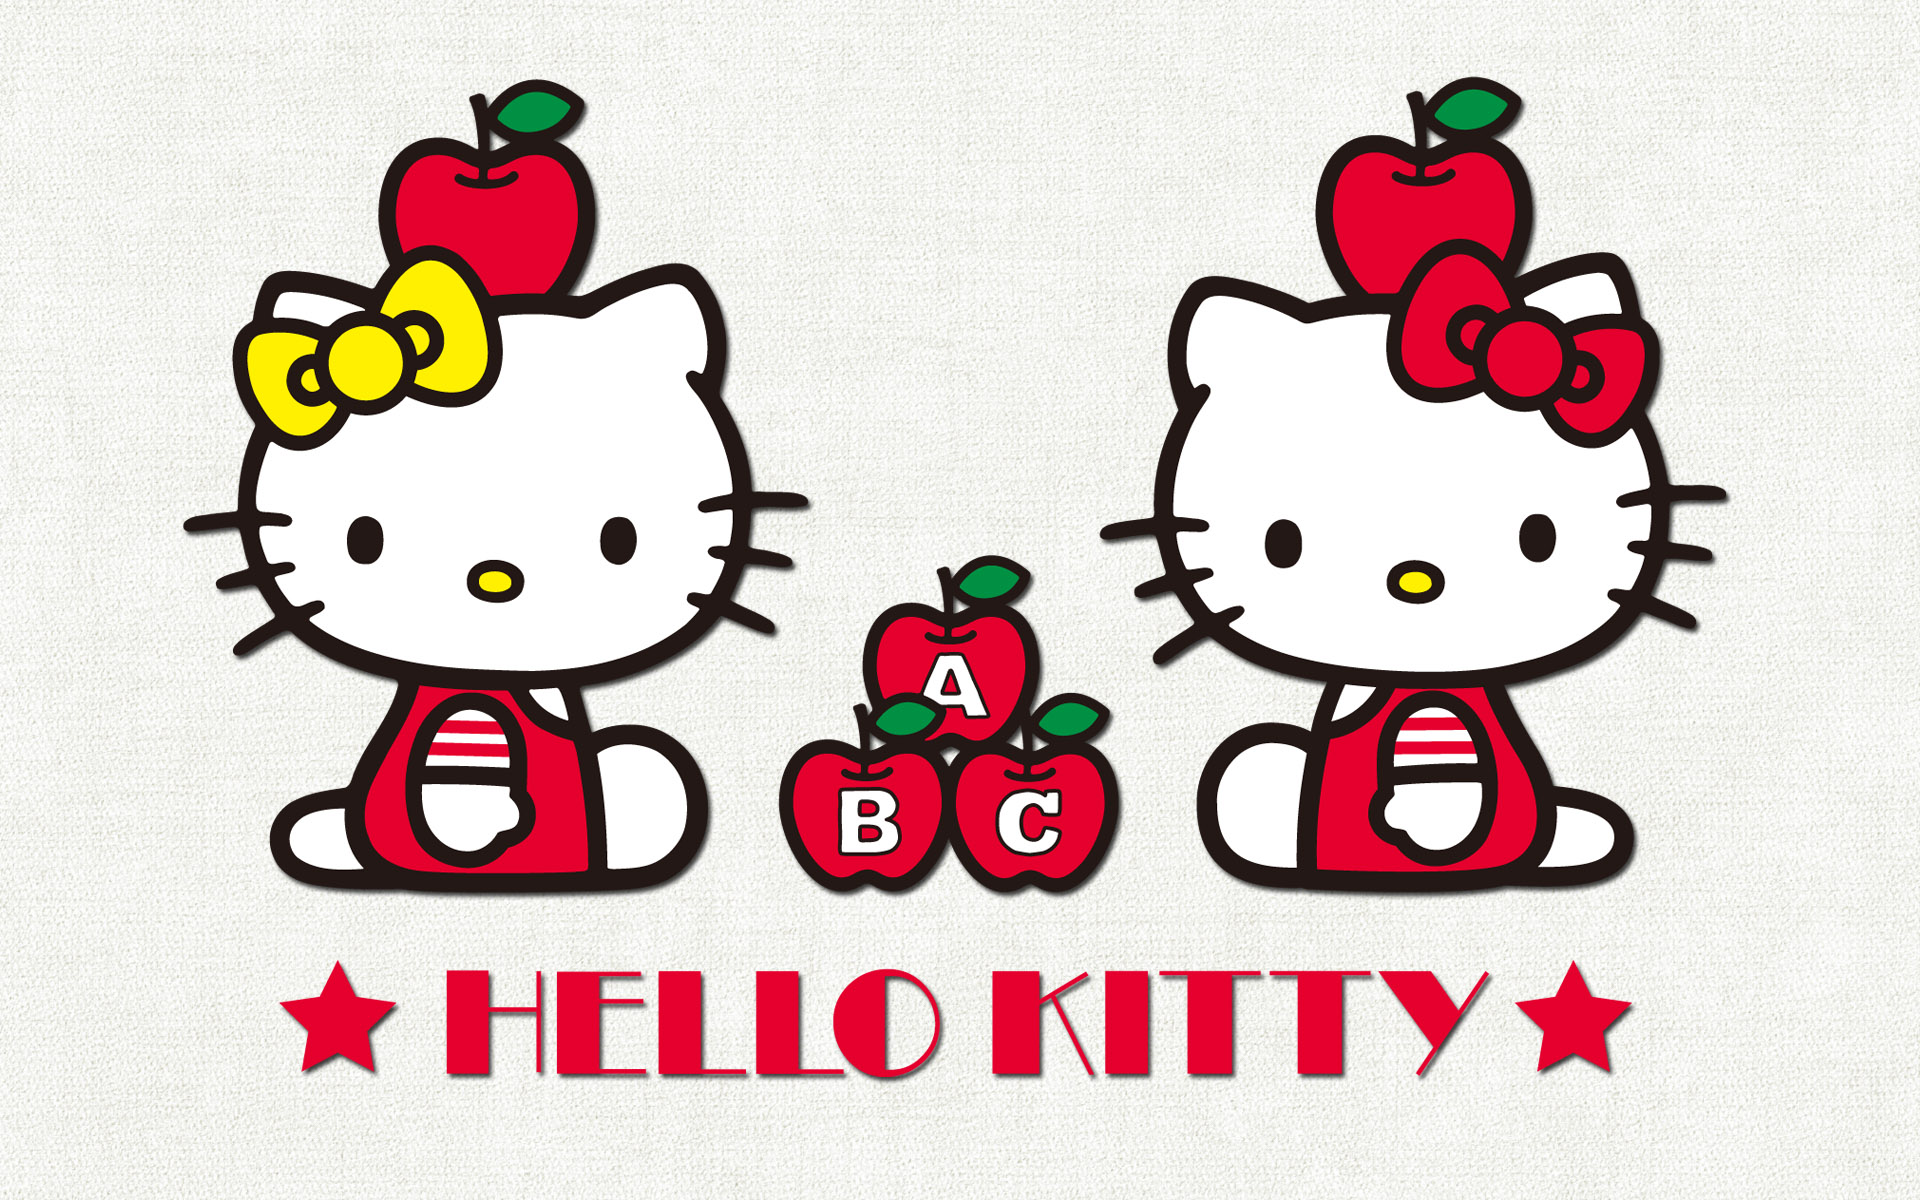 hellokitty 猫设计图__动漫人物_动漫动画_设计图库_昵图网nipic.com